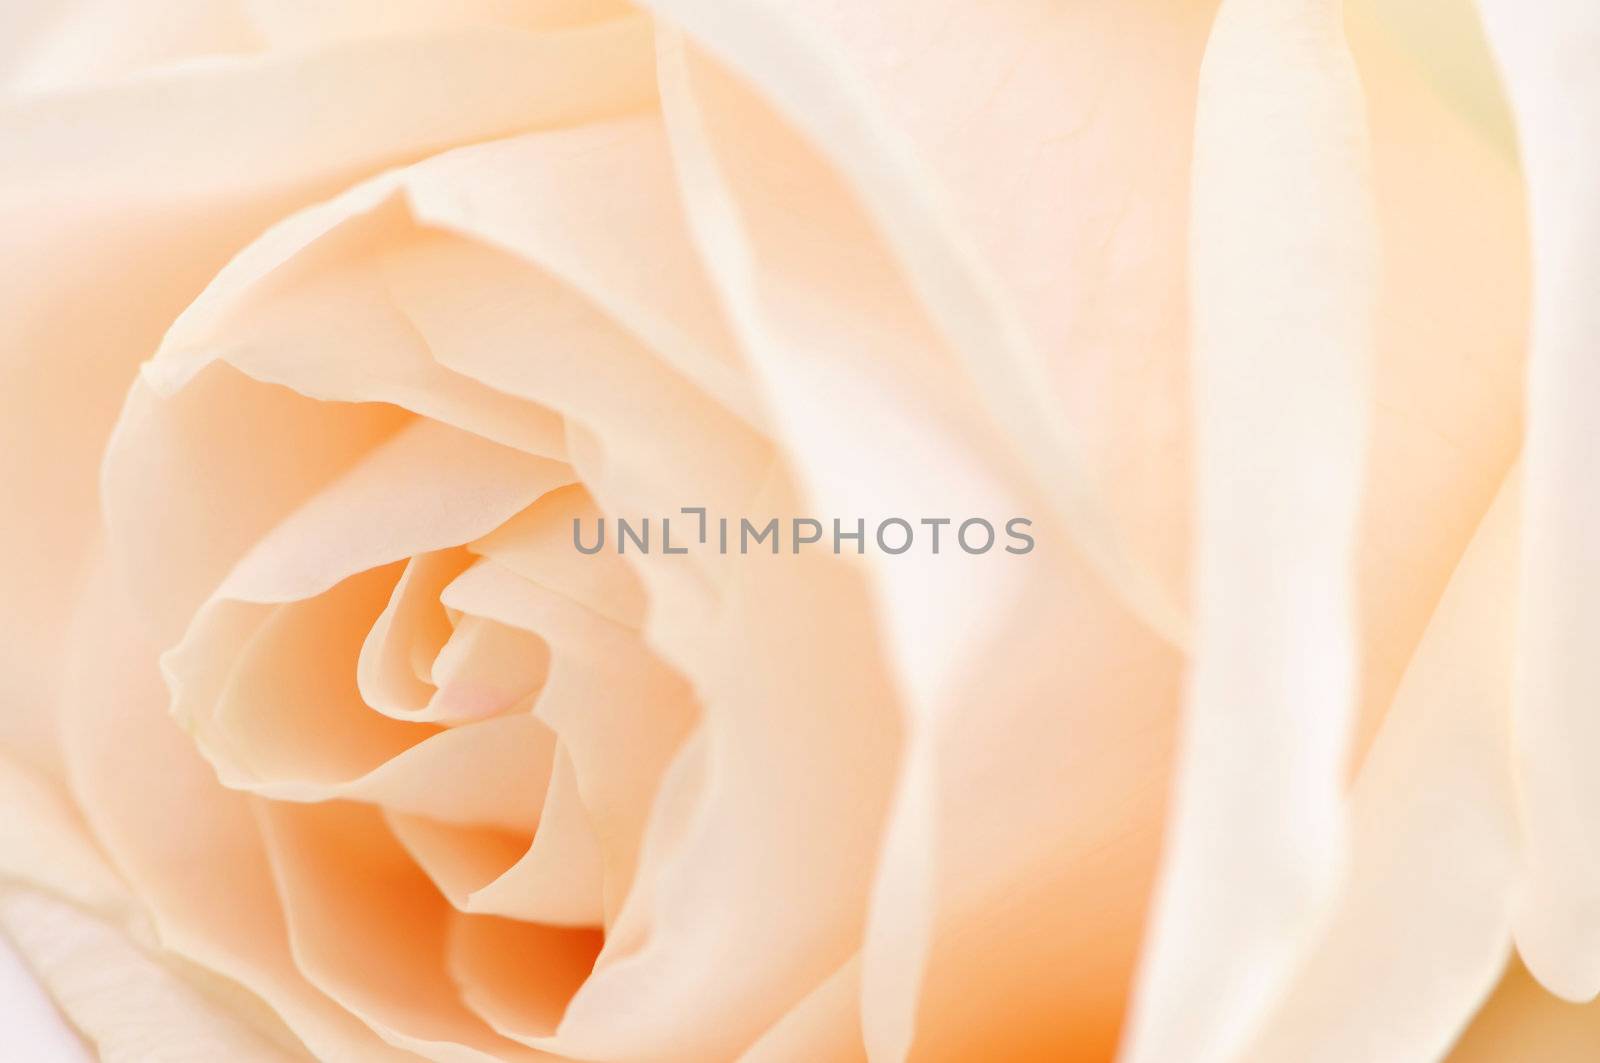 Macro of a delicate beige rose flower